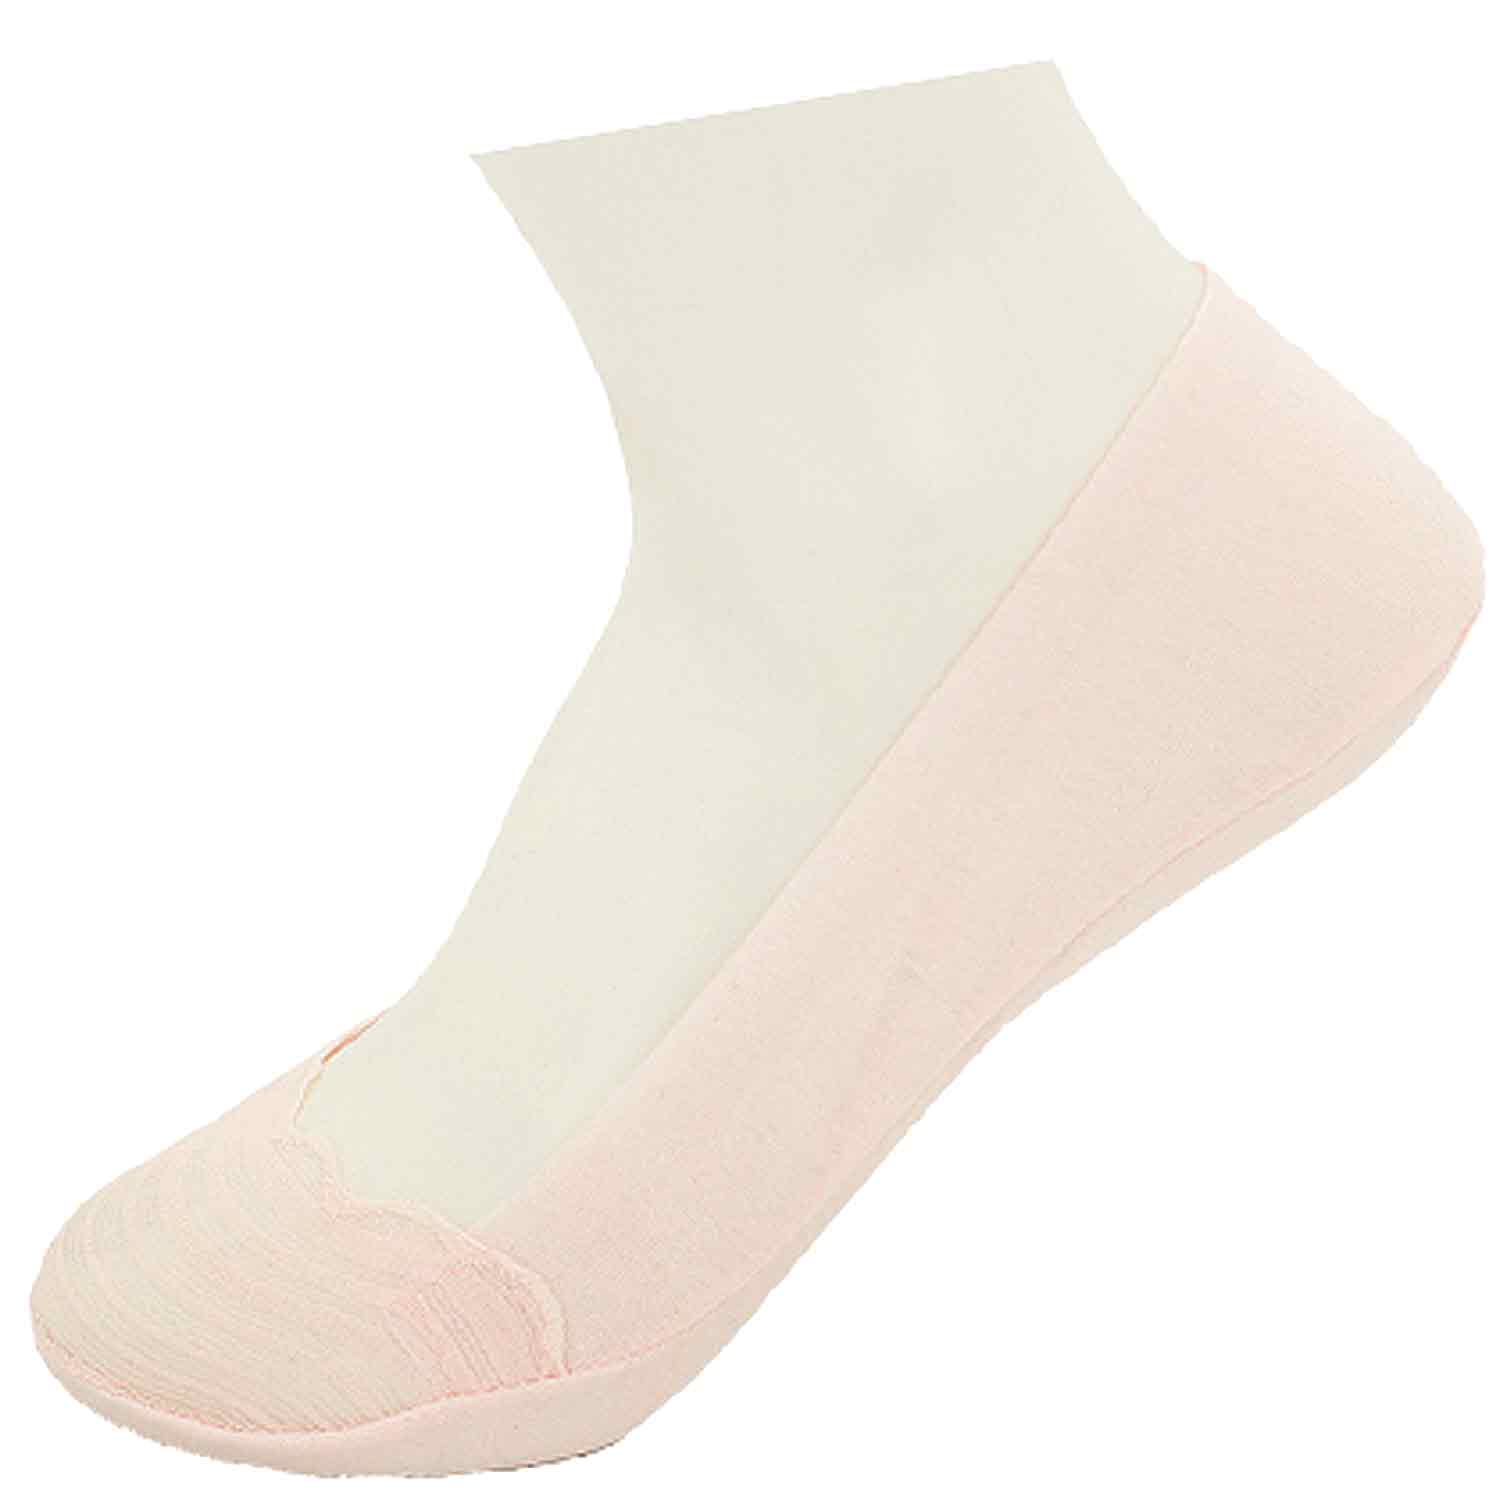 The Skandinavian Brand 5er Pack Ballerina Socken mit Spitze Gr. 36-41 pink